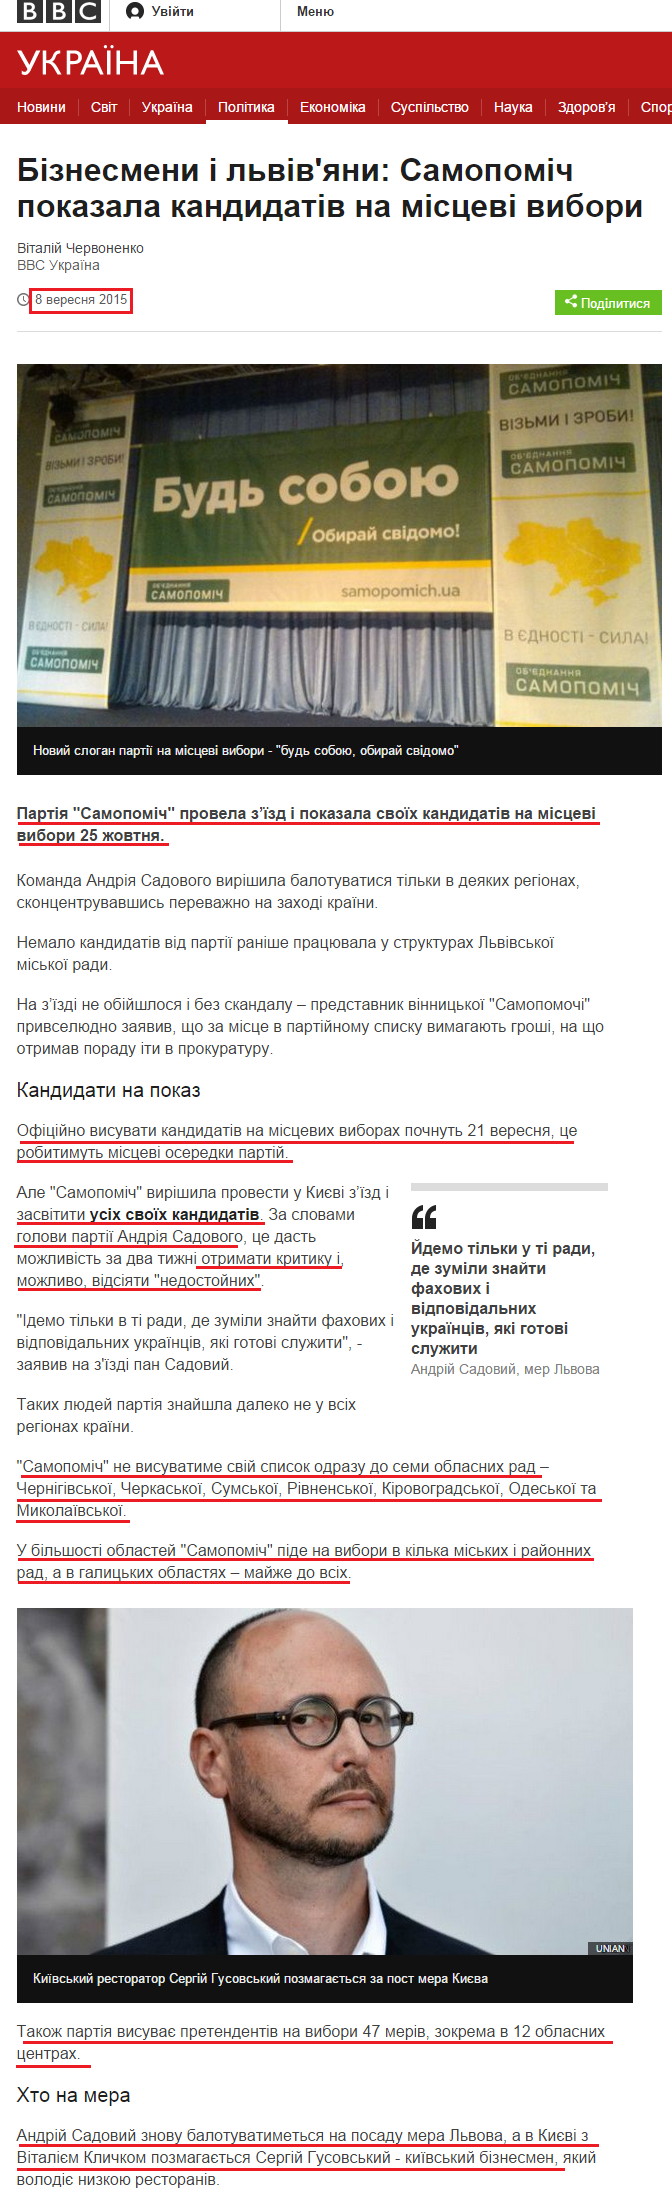 http://www.bbc.com/ukrainian/politics/2015/09/150908_samopomich_candidates_local_election_vc